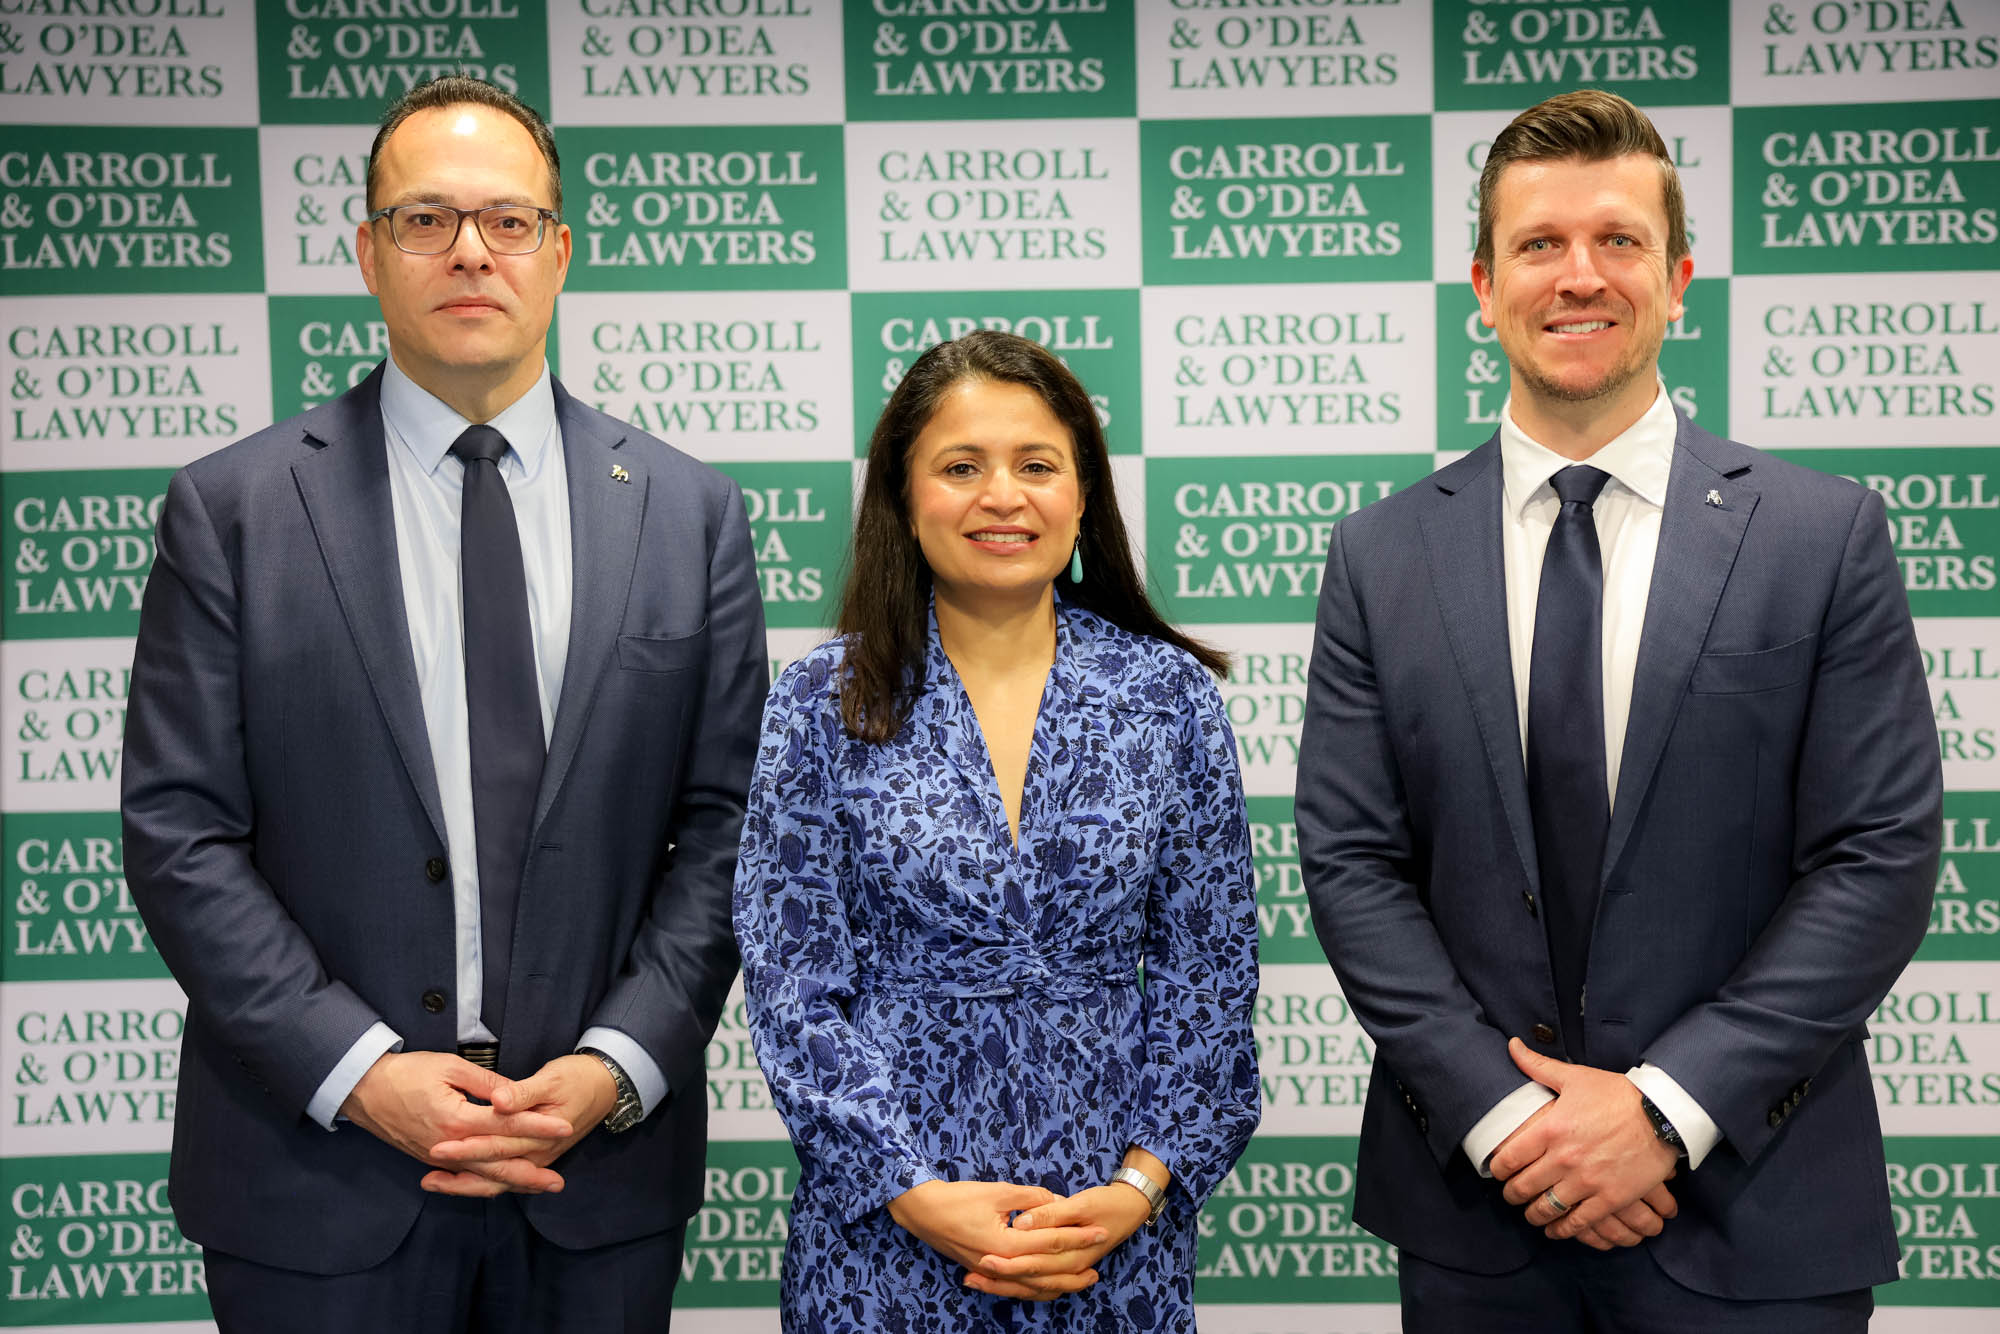 Carroll & O’Dea Lawyers extends partnership with Canterbury-Bankstown Bulldogs